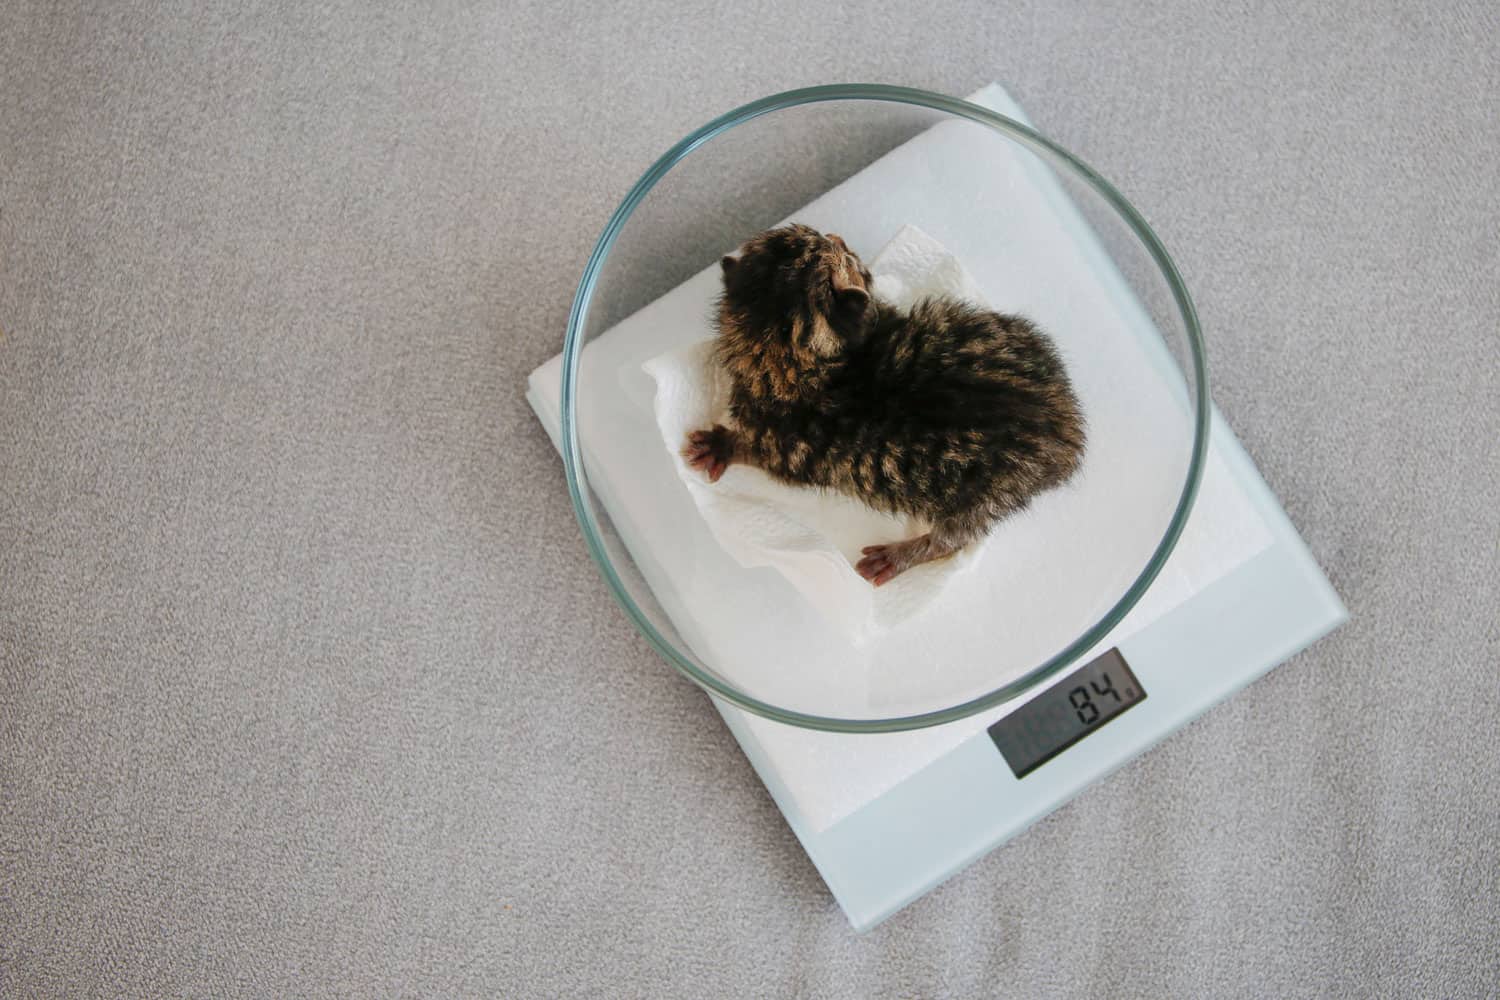 A newborn kitten on the scales.
